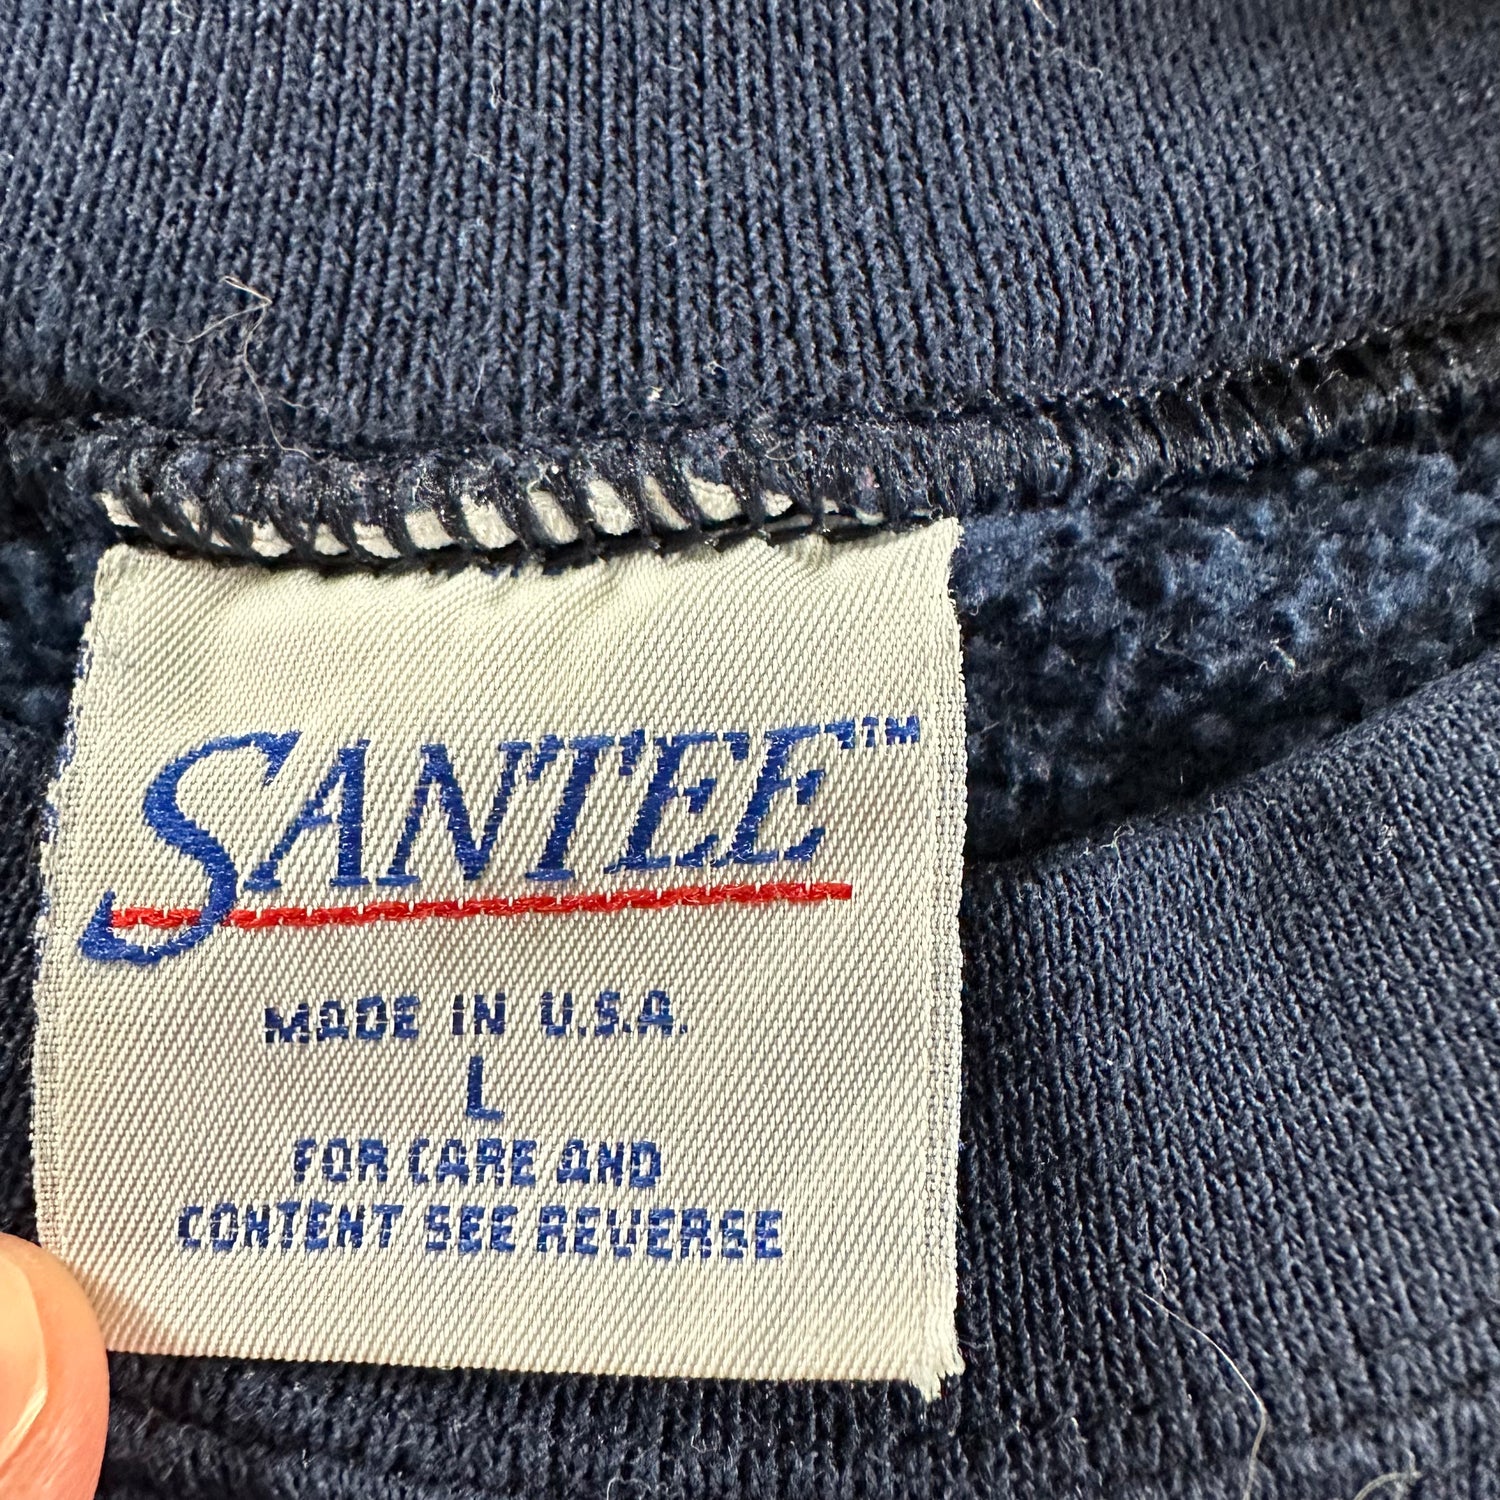 Vintage 1990s Navy Sweatshirt size Large